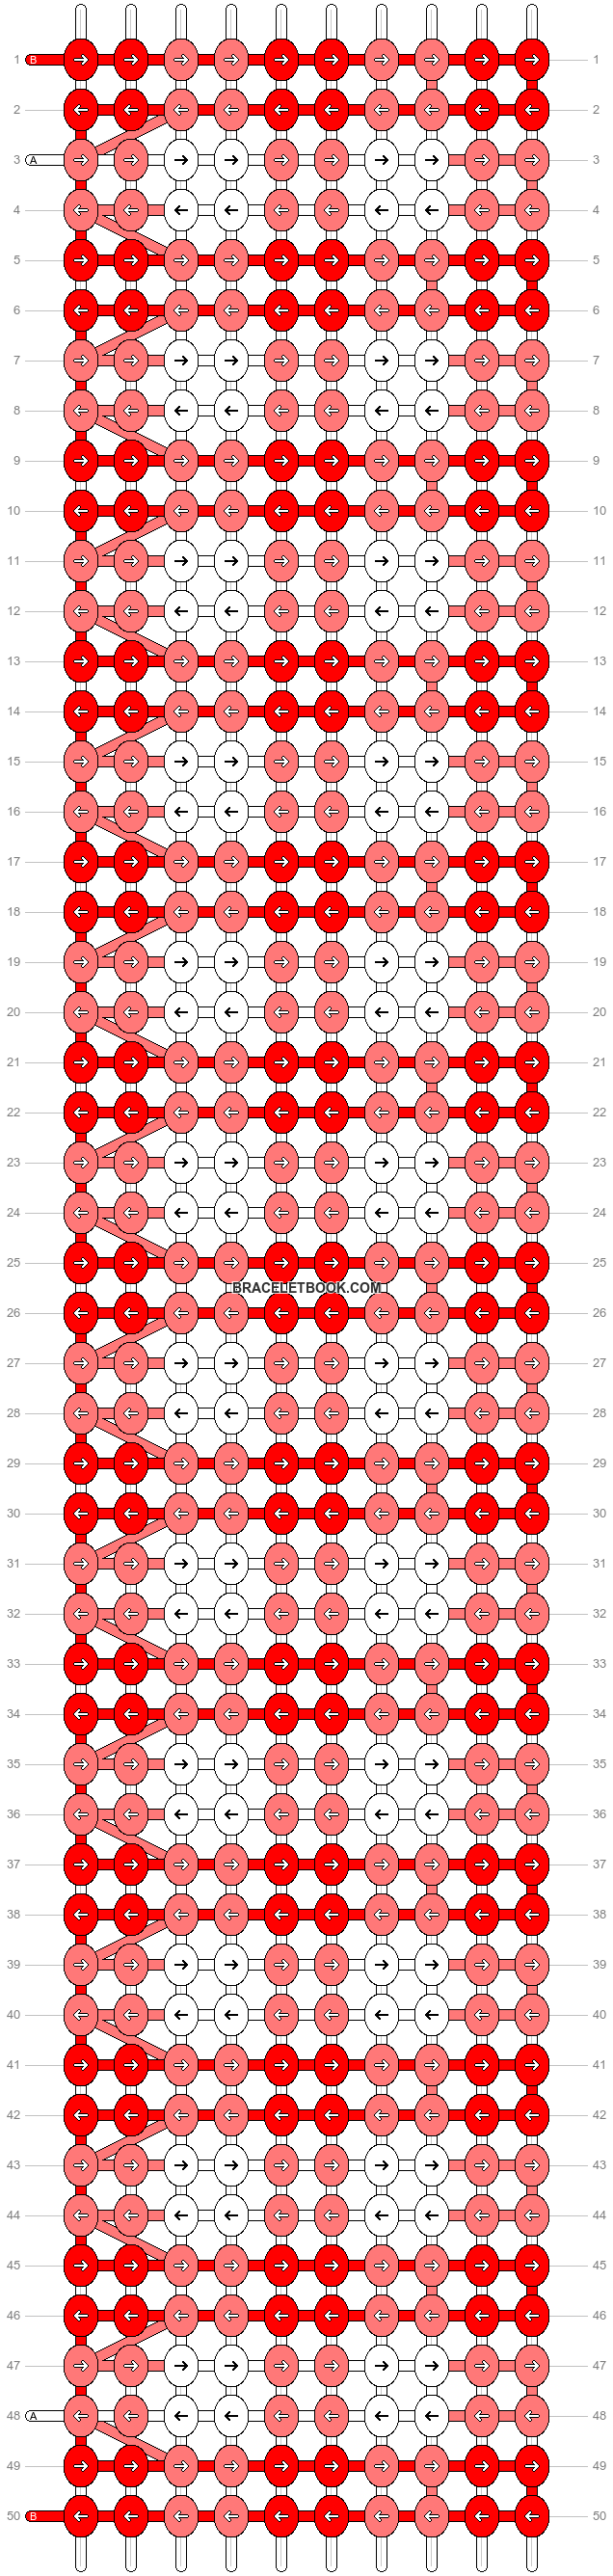 Alpha pattern #15051 variation #84303 pattern